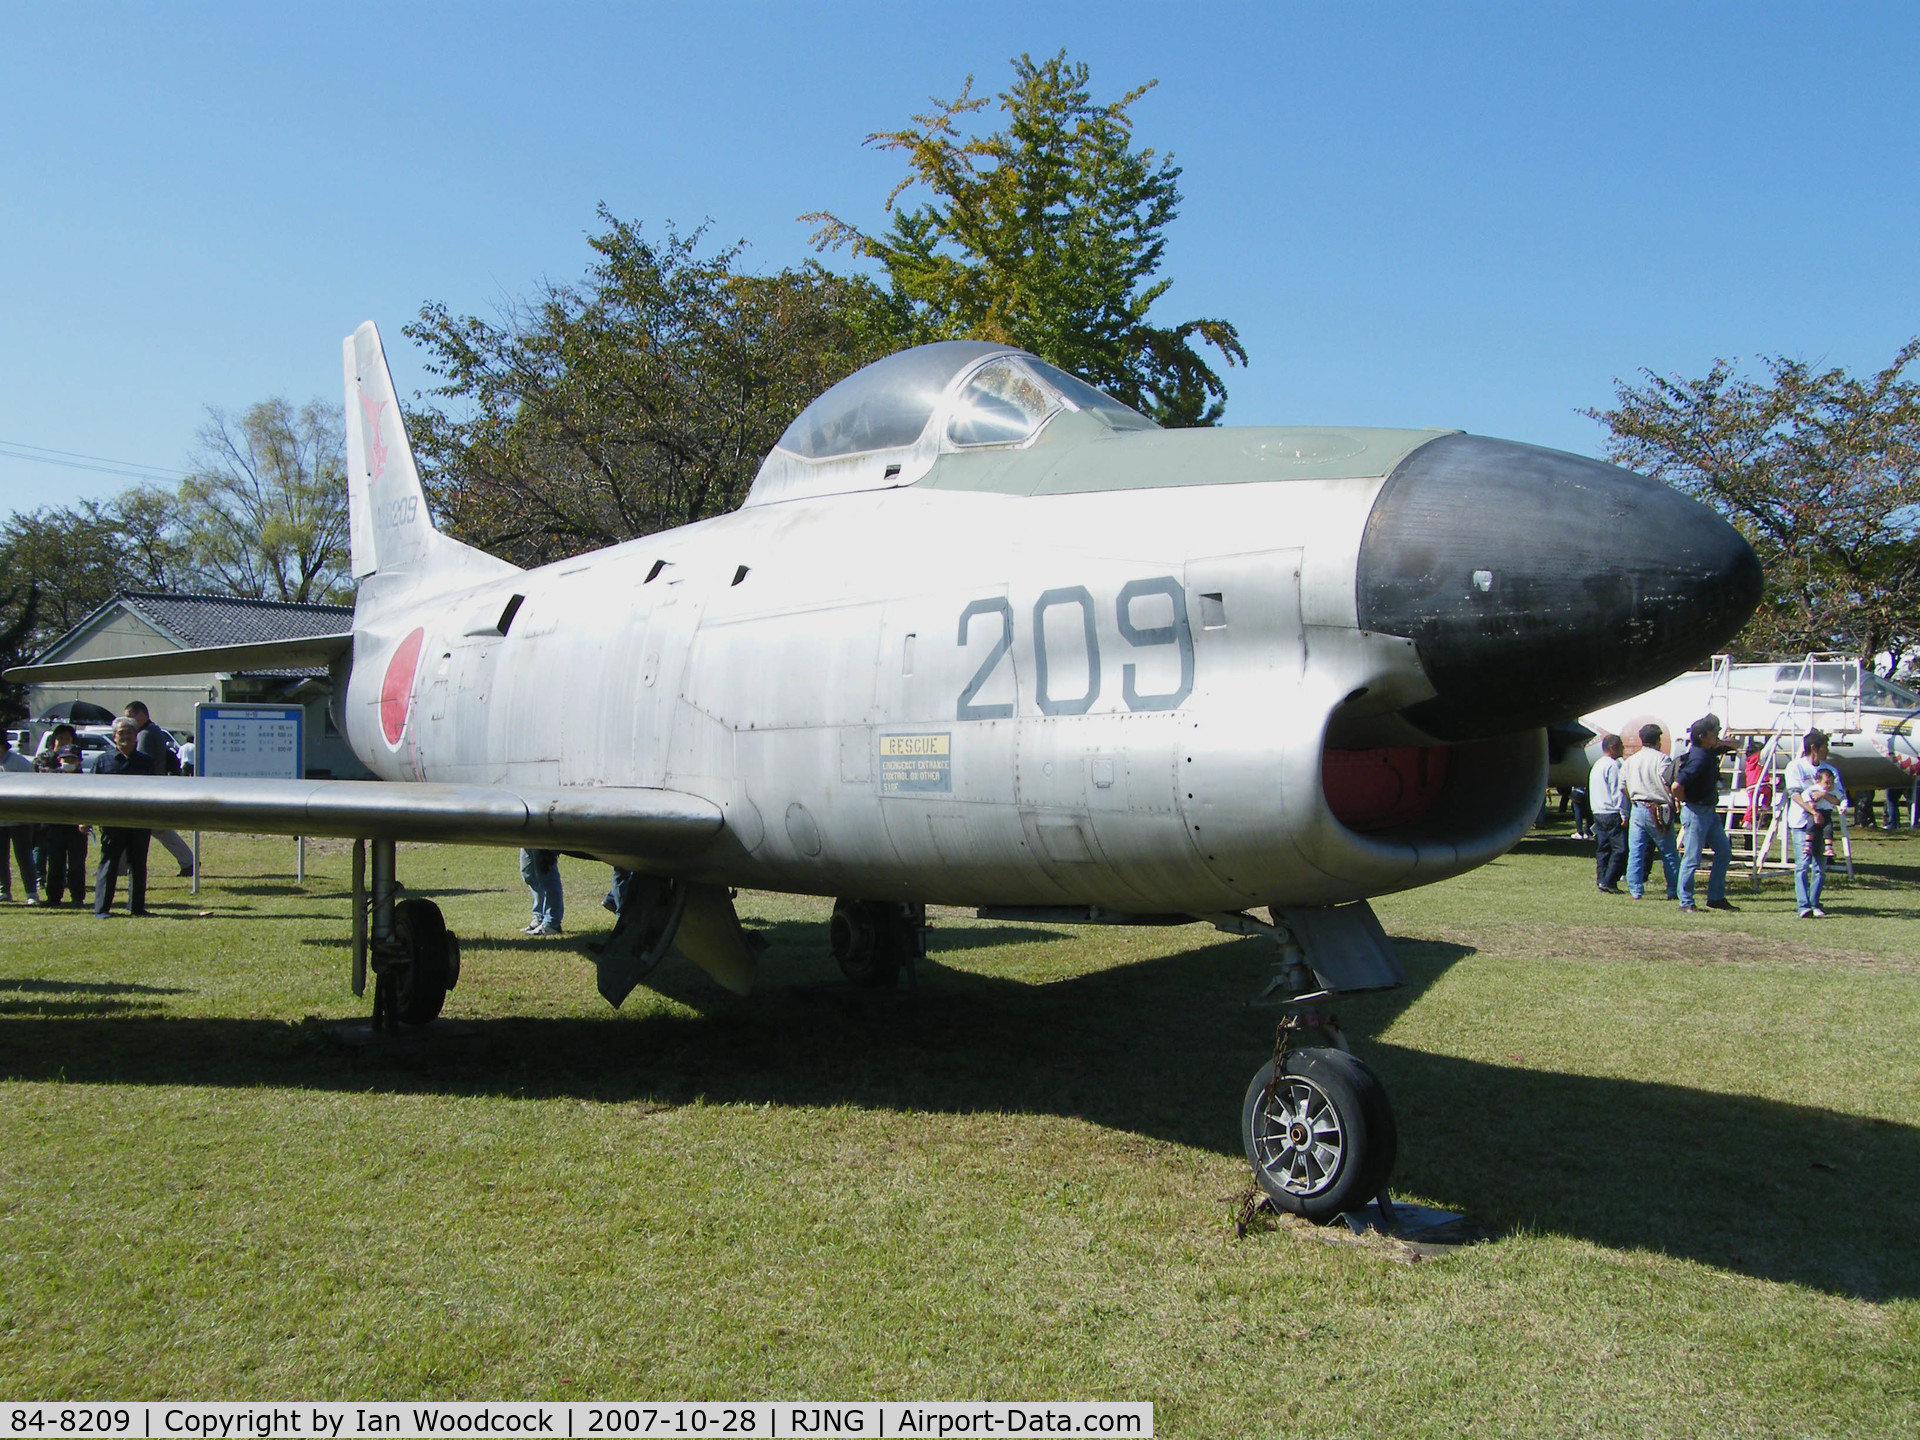 84-8209, North American F-86D Sabre C/N 190-725, F-86D/Gifu AB,Preserved (carries 04-8209)